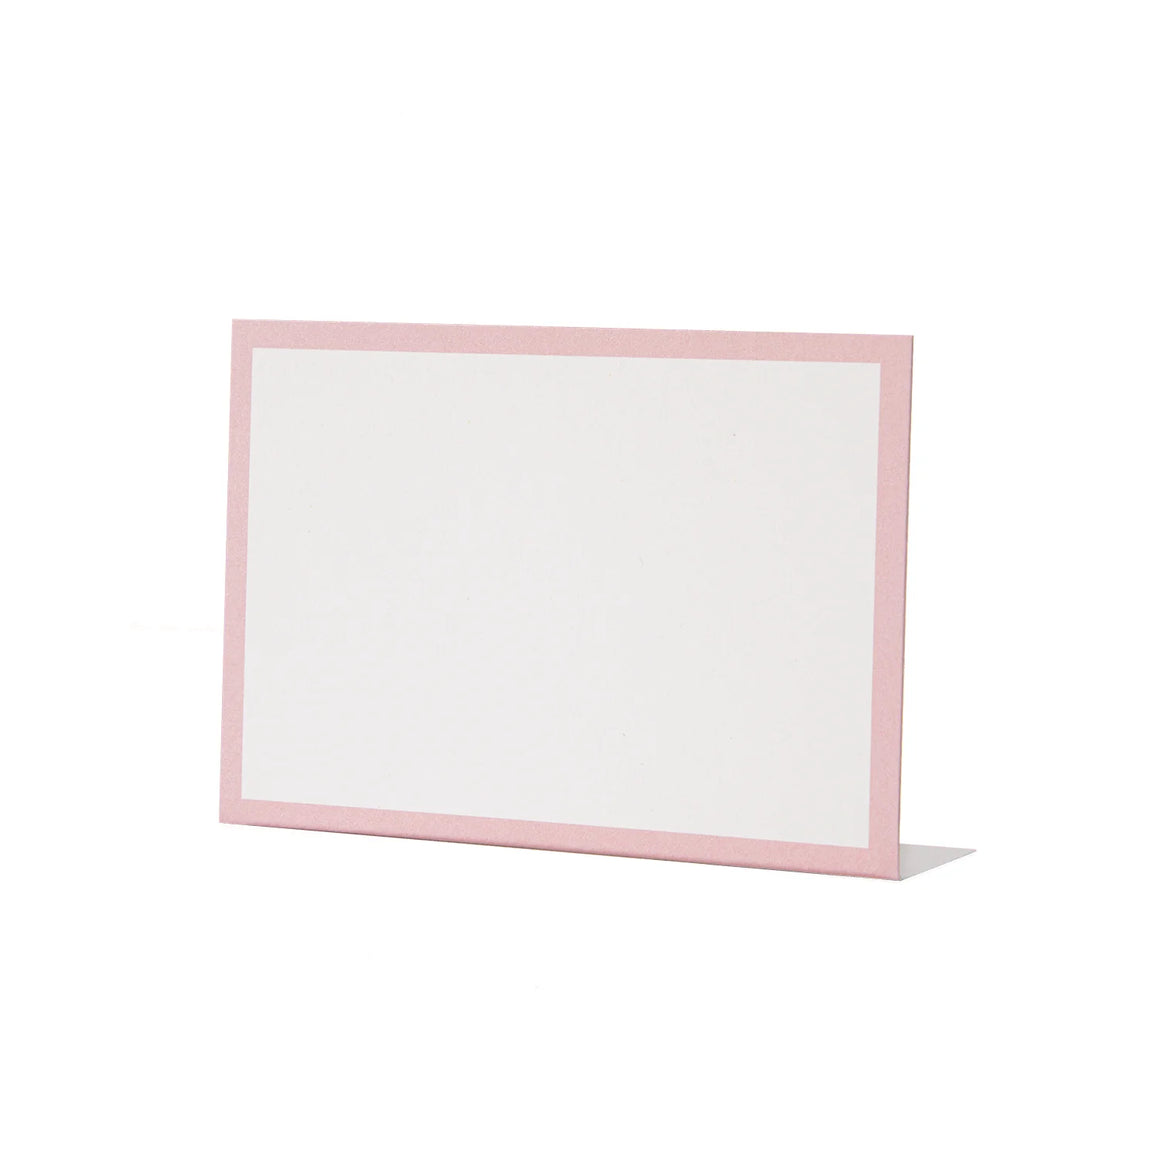 PLACE CARDS - PINK FRAME (Bottom Fold)